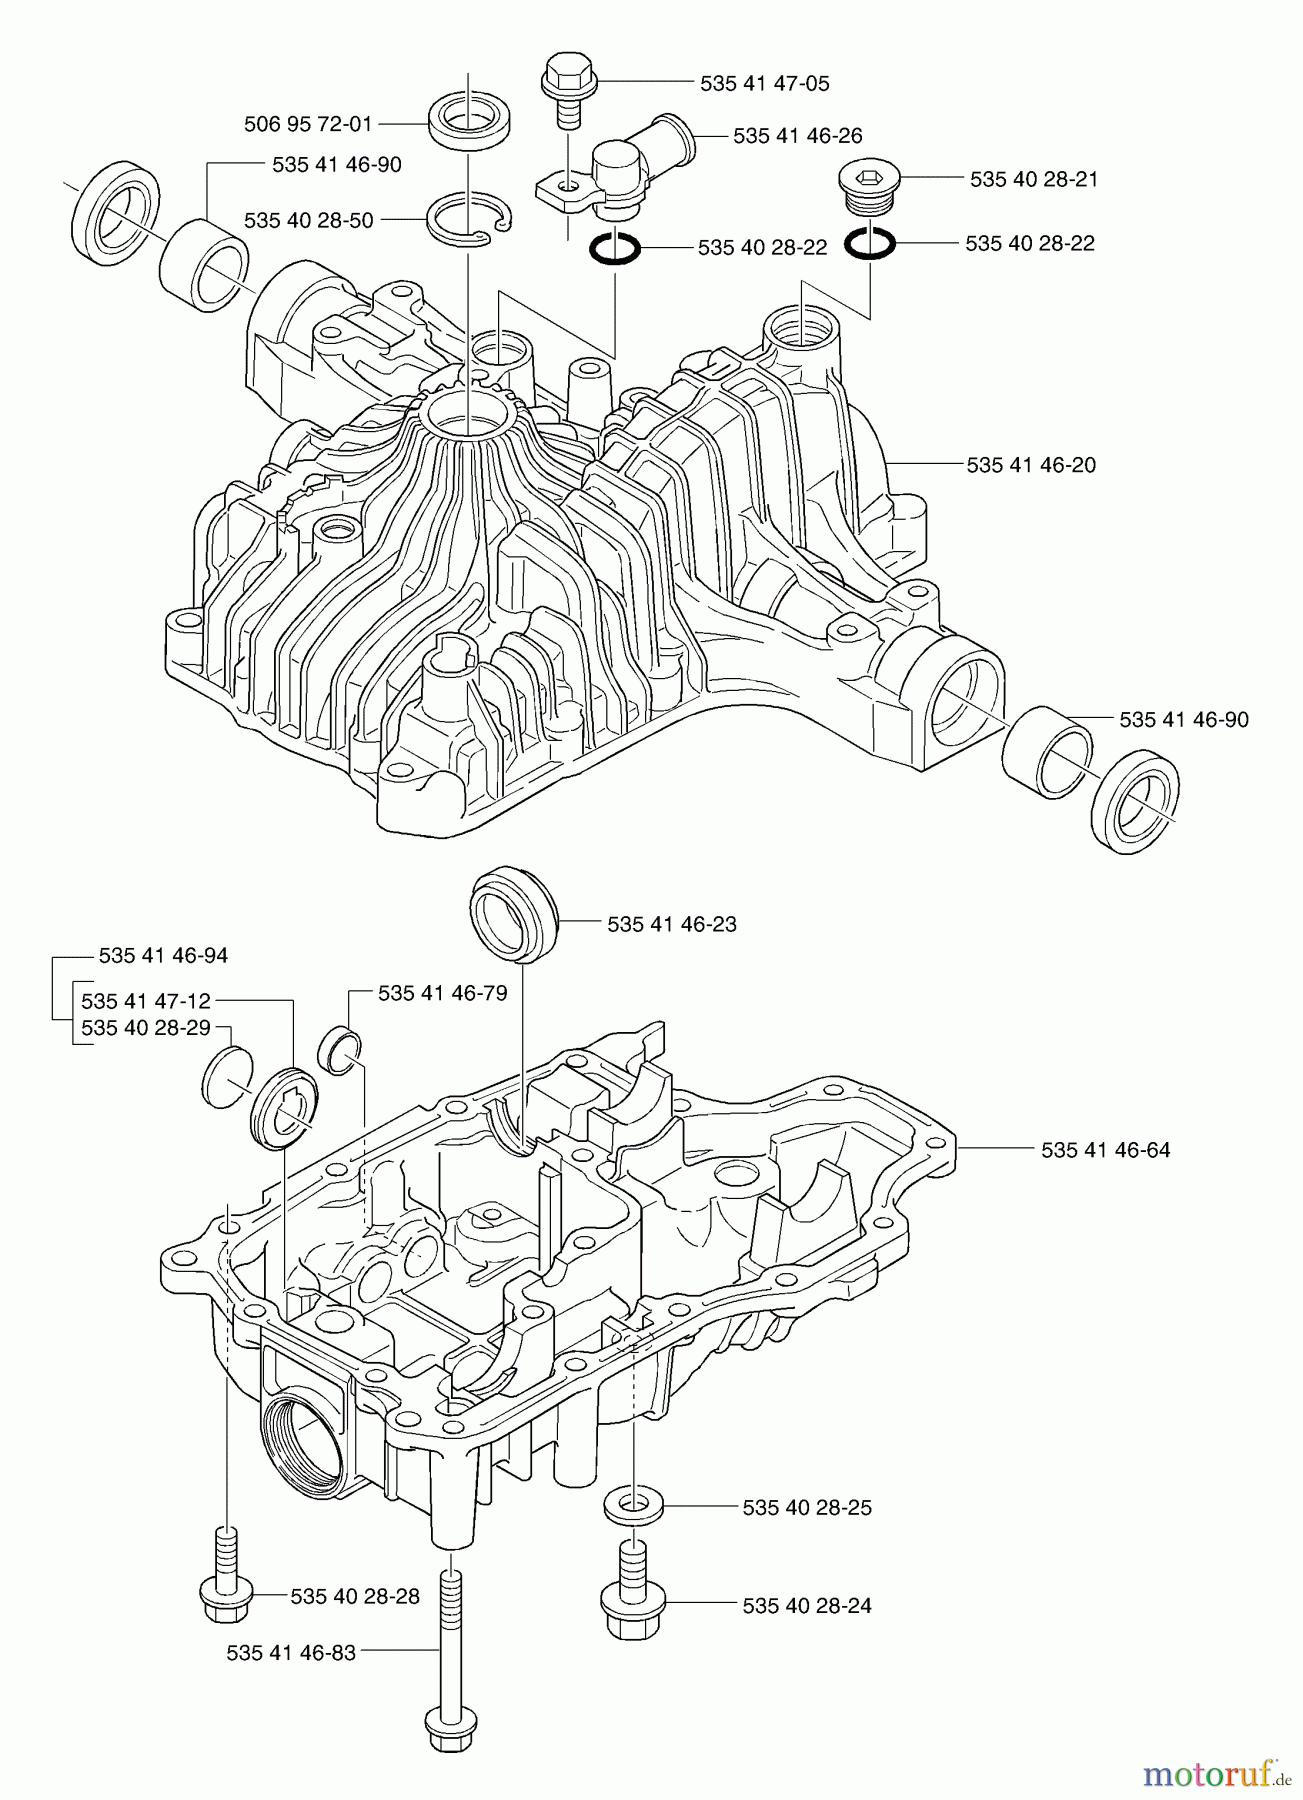  Husqvarna Motoren K 66 - Tuff Torq Transmission (2002-06 & After) Transaxle Case